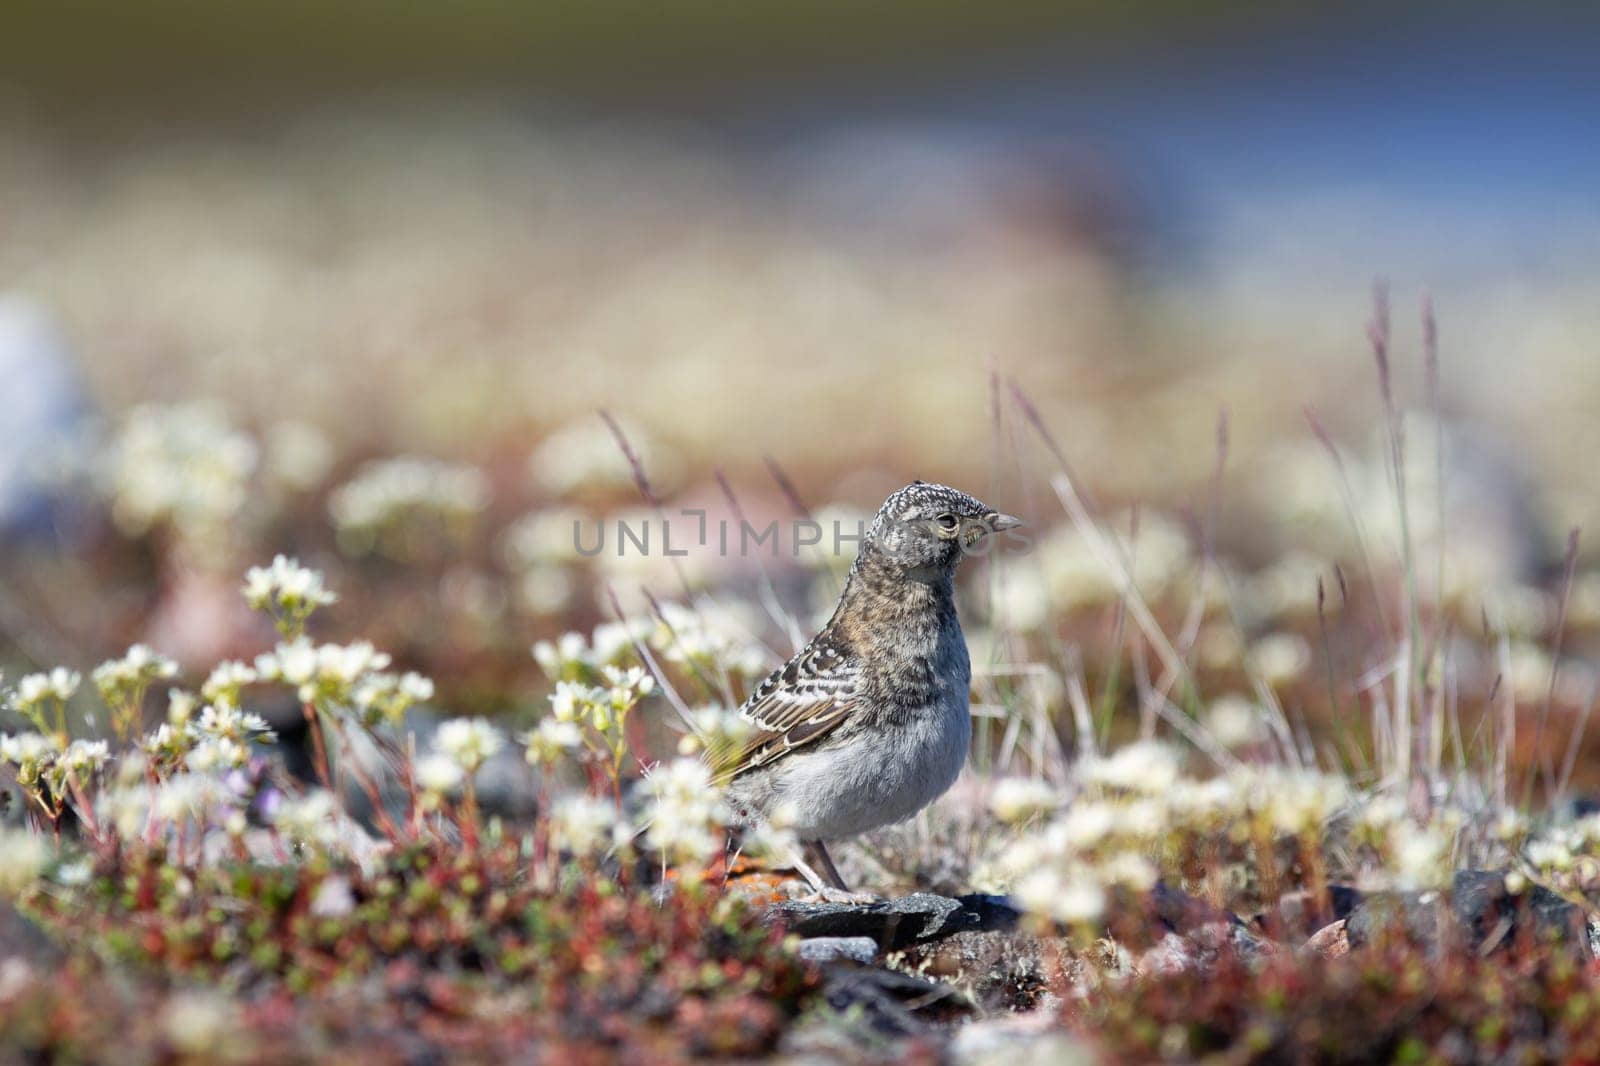 Immature horned lark or shore lark standing between plants in Canada's arctic, near Arviat, Nunavut, Canada